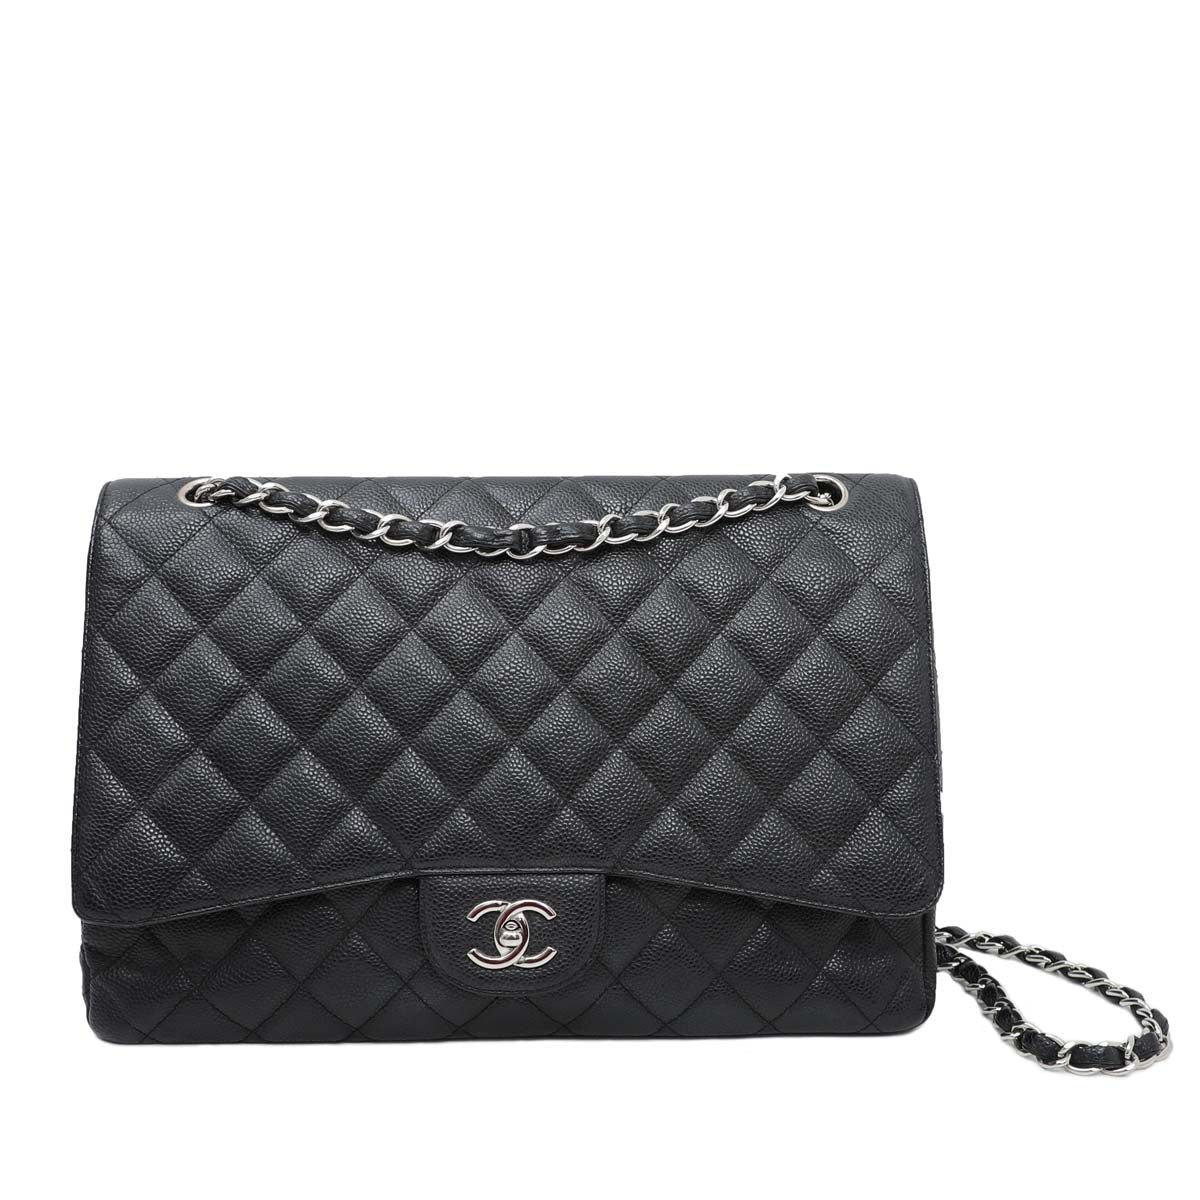 The Closet - Chanel Black CC Classic Single Flap Bag | The Closet